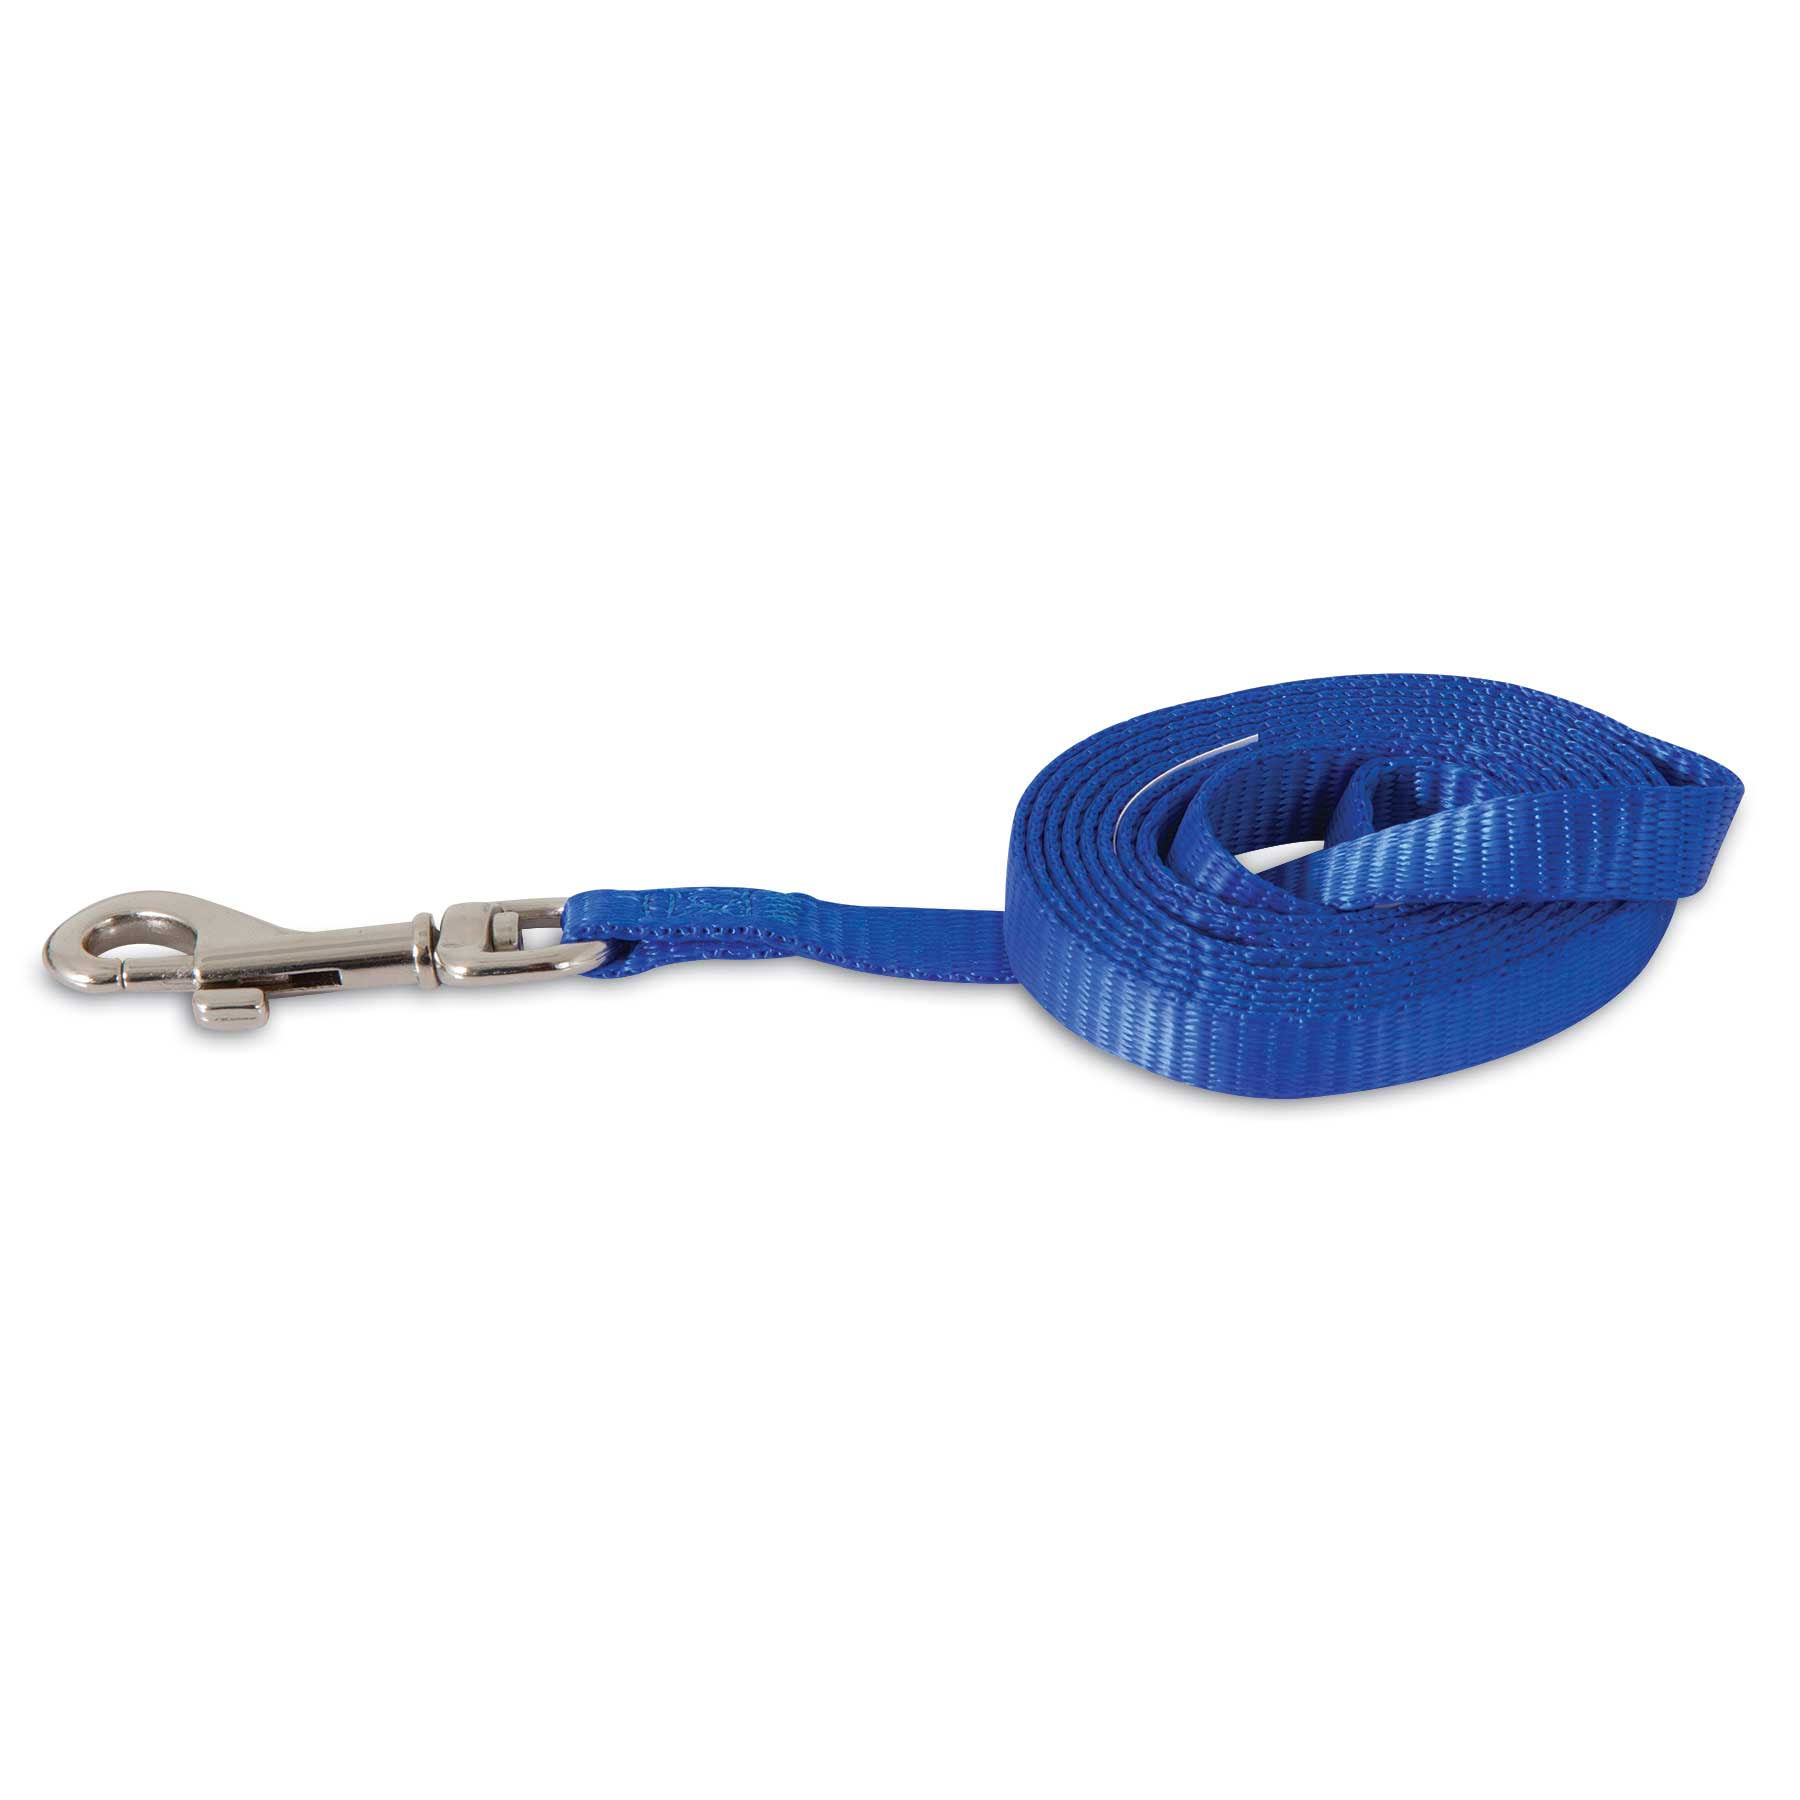 Aspen Pet Products Standard Nylon Leash - Blue, 4ft x 3/8in